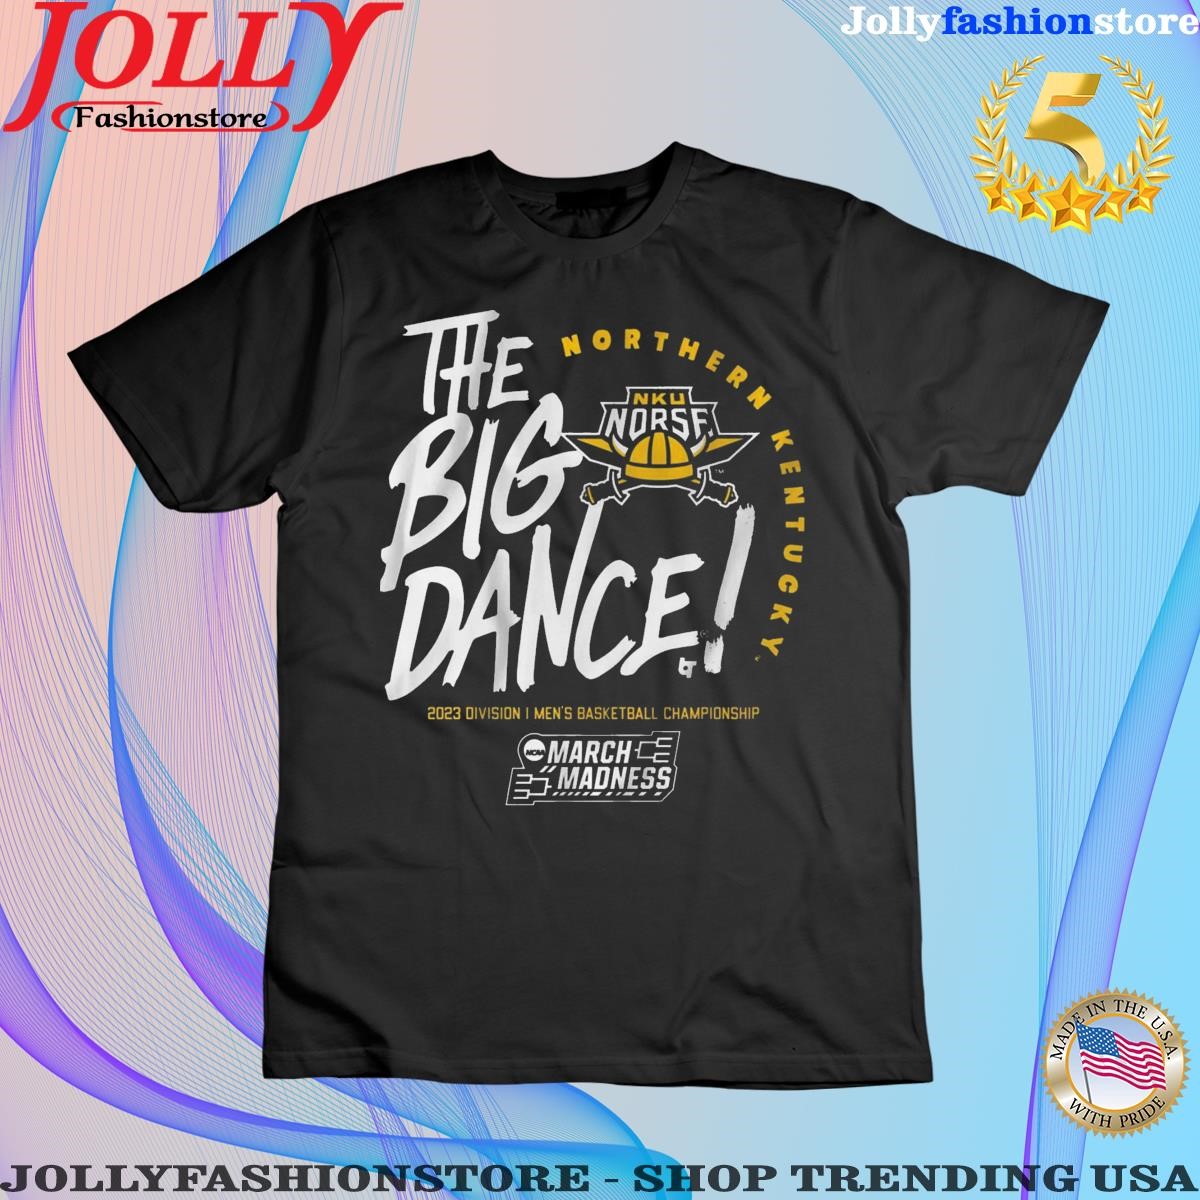 Northern Kentucky the big dance shirt women tee shirt.png